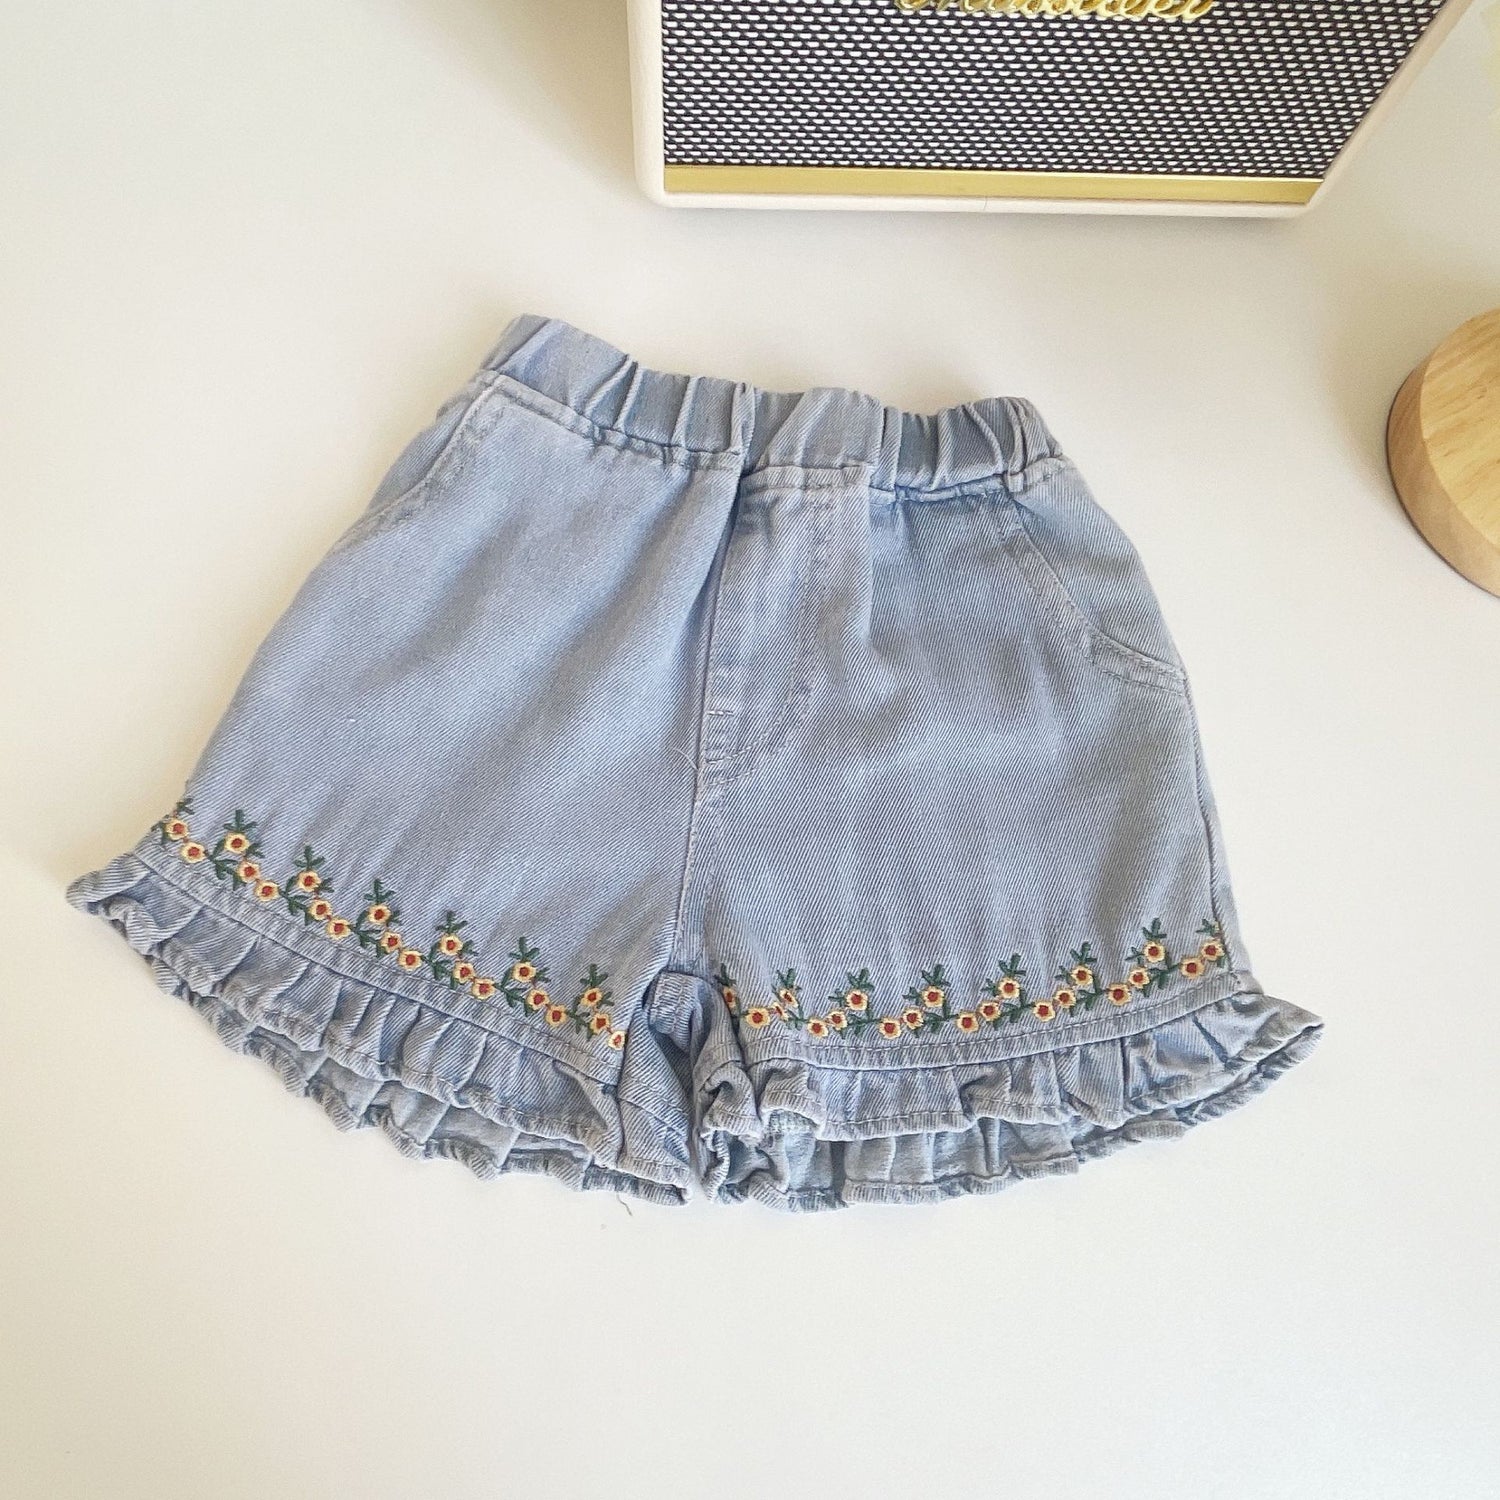 [363630] - Setelan Blouse Kancing Celana Jeans Bordir Import Anak Perempuan - Motif Flower